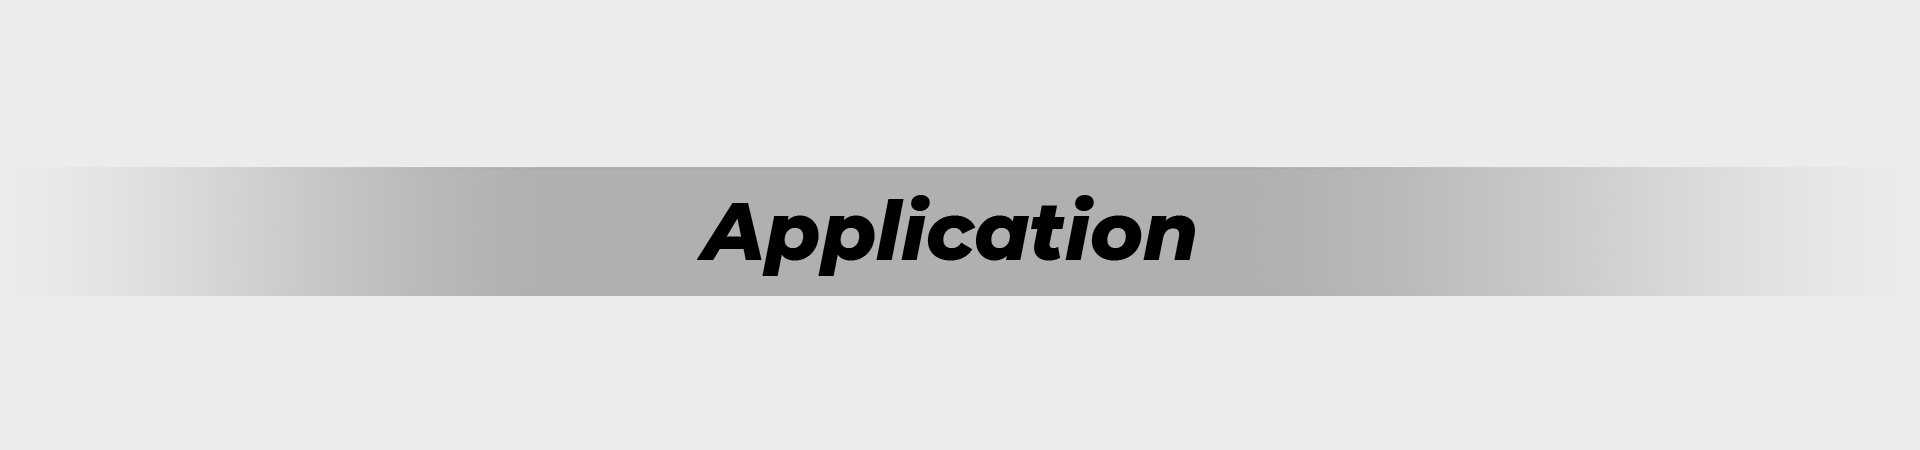 application_